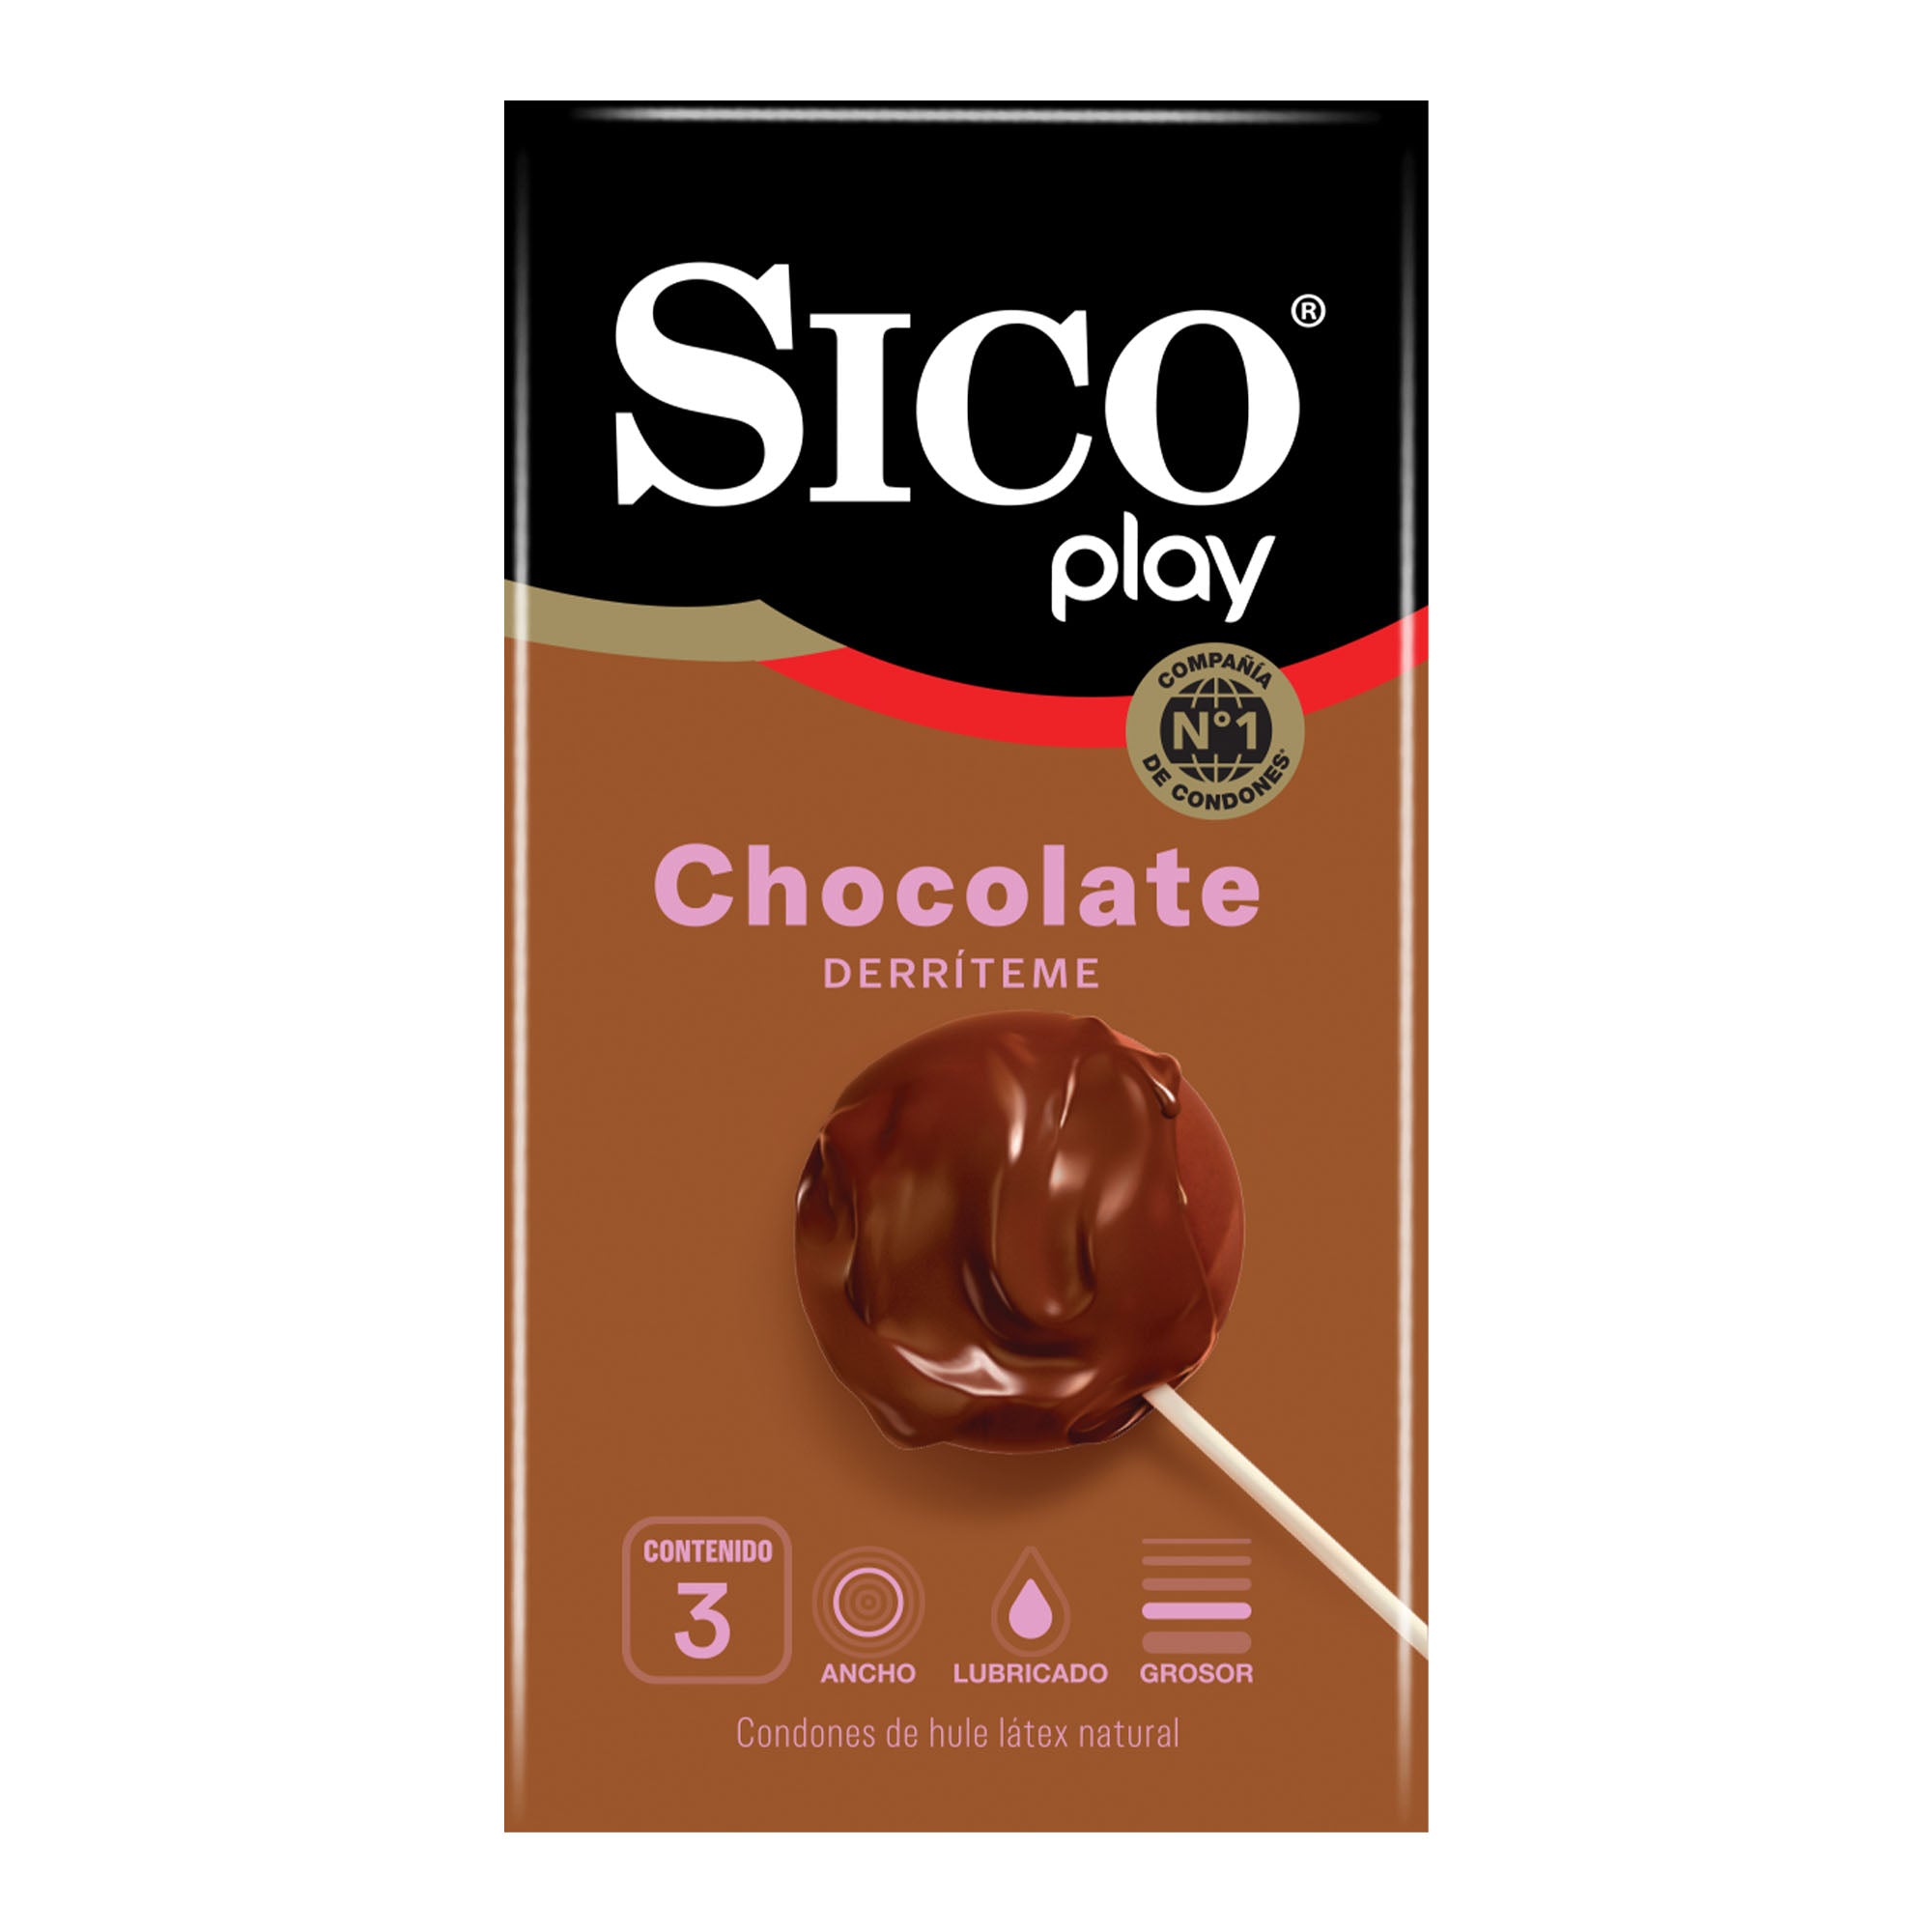 Sico® Play Chocolate